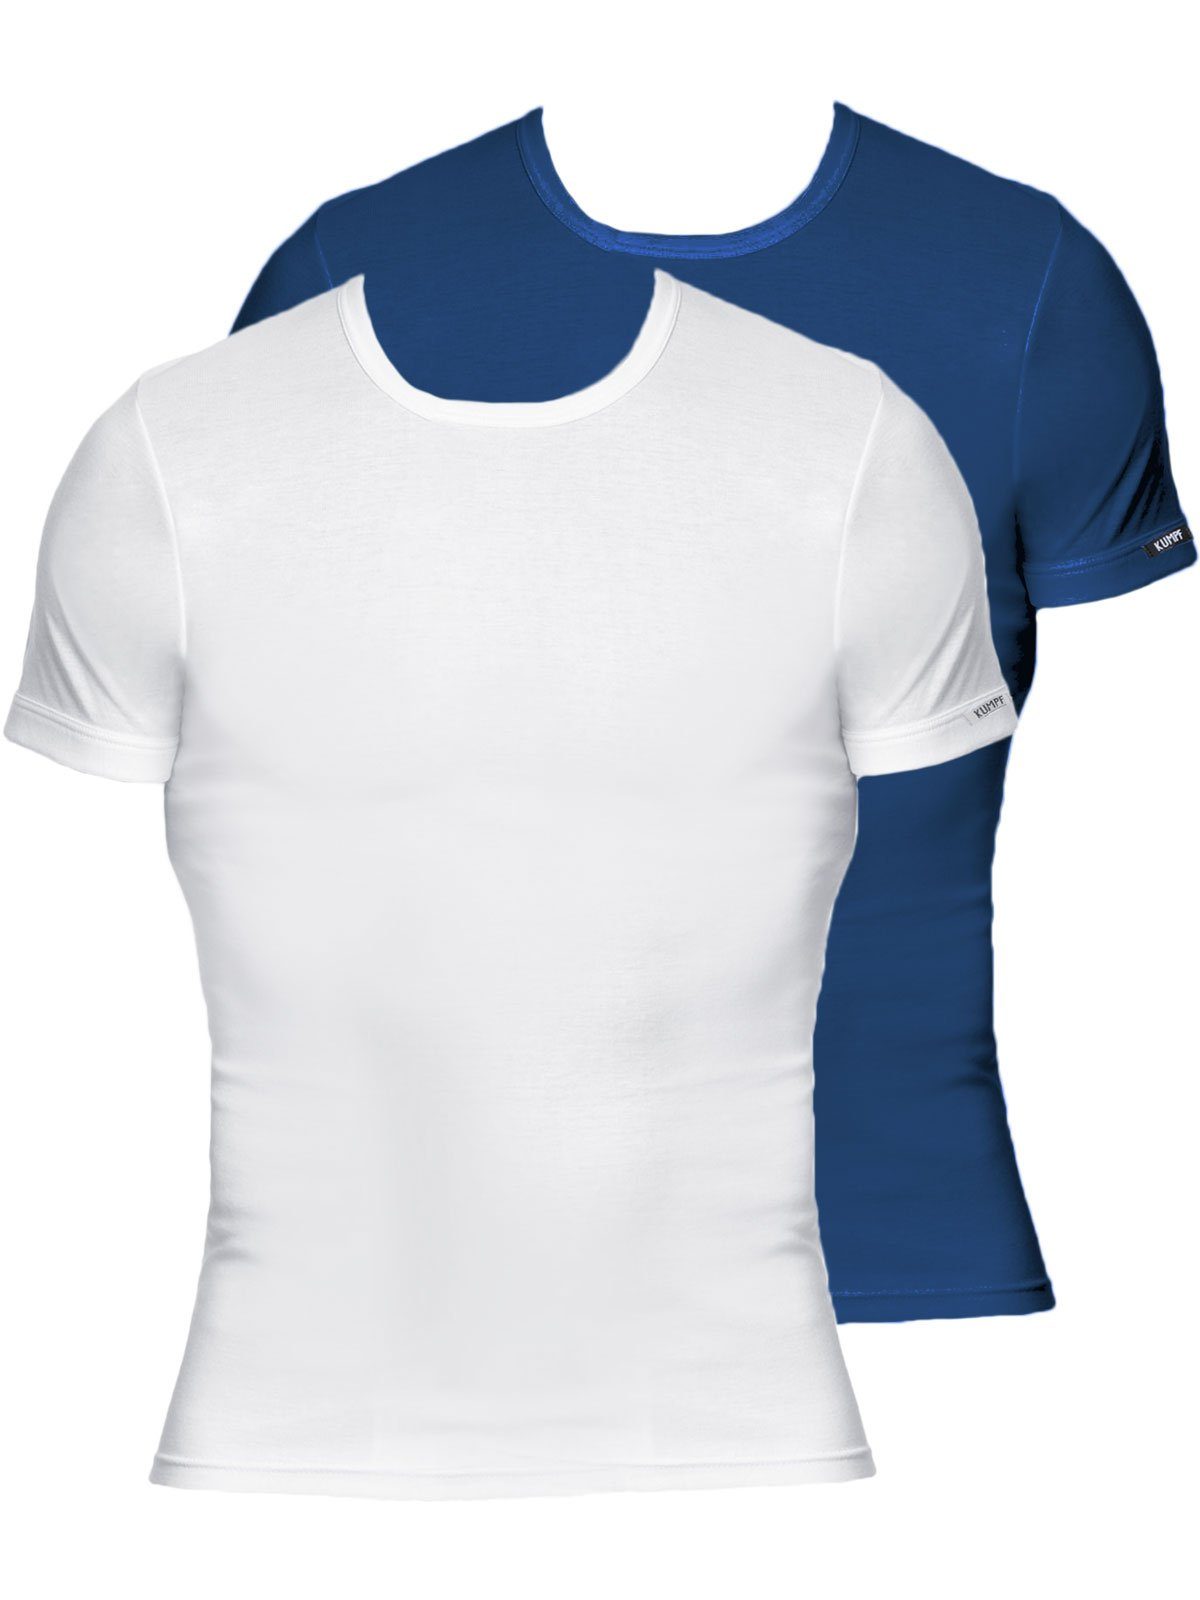 KUMPF Unterziehshirt 2er Sparpack Herren T-Shirt Bio Cotton (Spar-Set, 2-St) hohe Markenqualität darkblue weiss